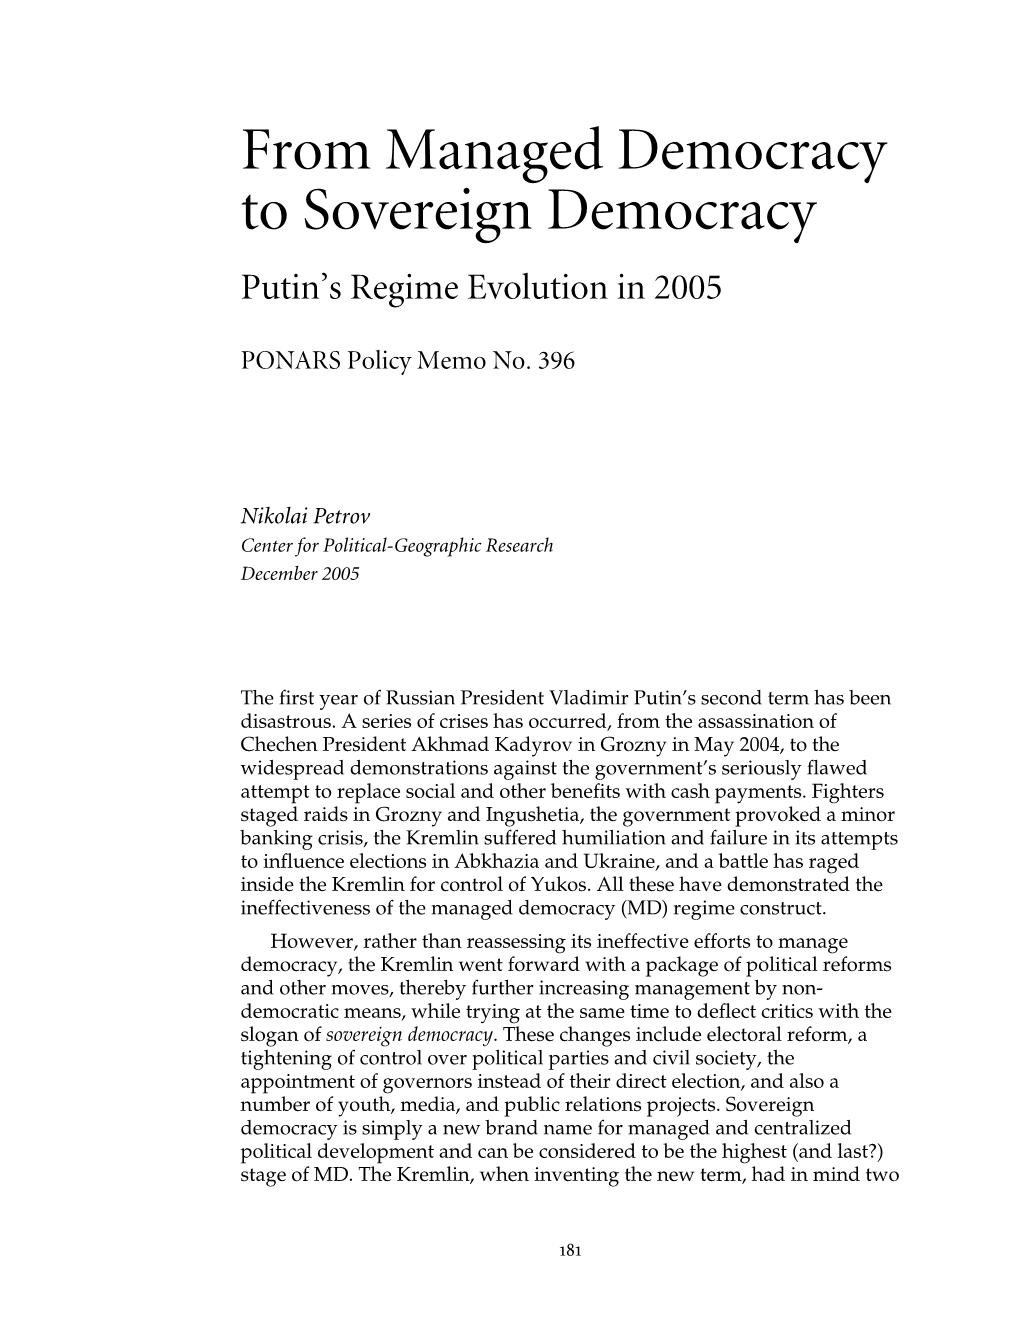 From Managed Democracy to Sovereign Democracy Putin’S Regime Evolution in 2005